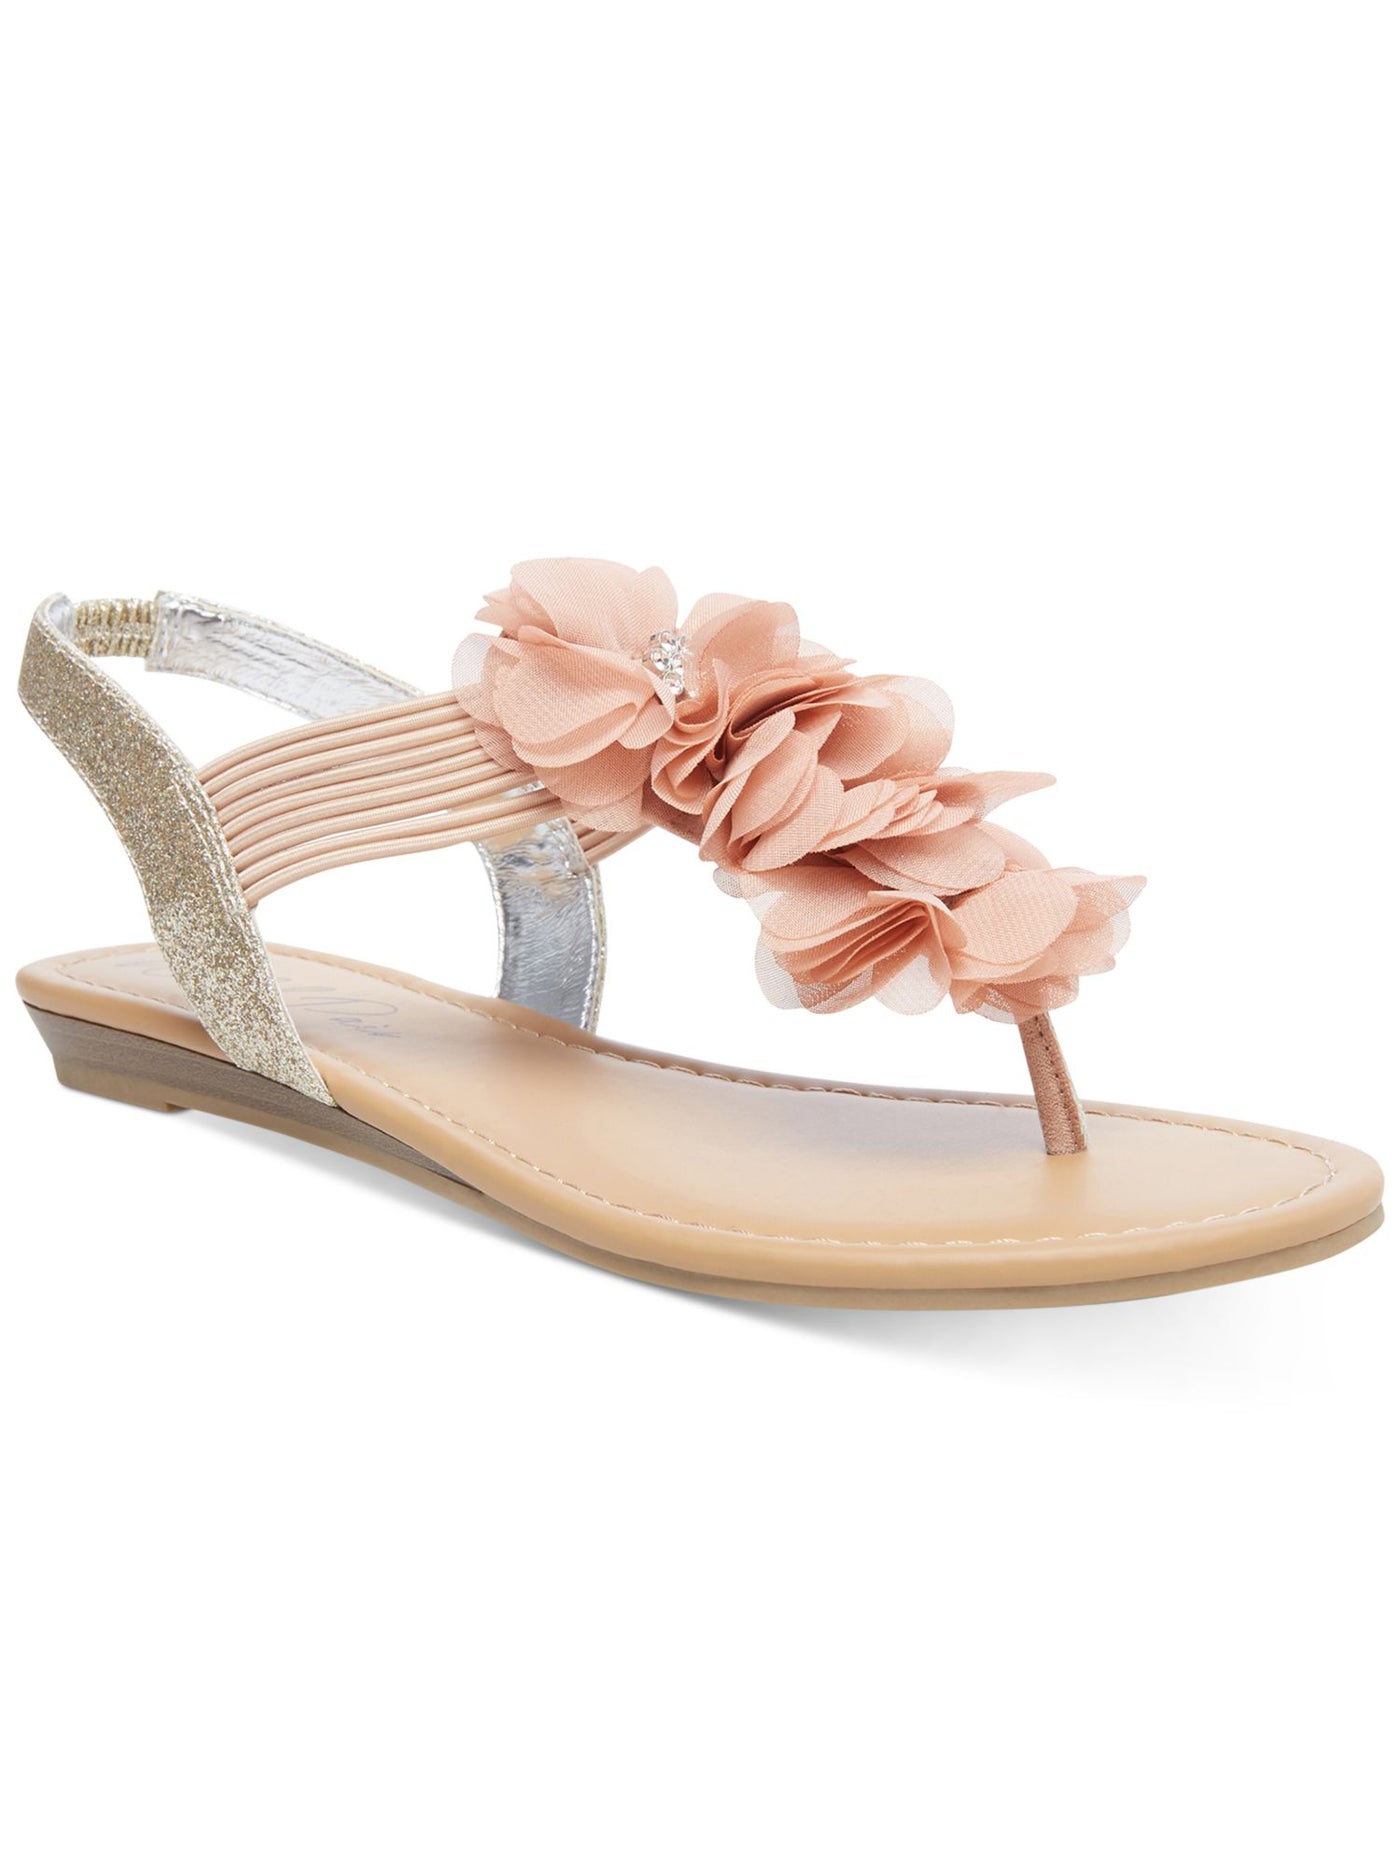 WILD PAIR Womens Pink 1/2 Heel Flower Details Slingback Glitter Stretch Sari Round Toe Slip On Thong Sandals Shoes 5 M